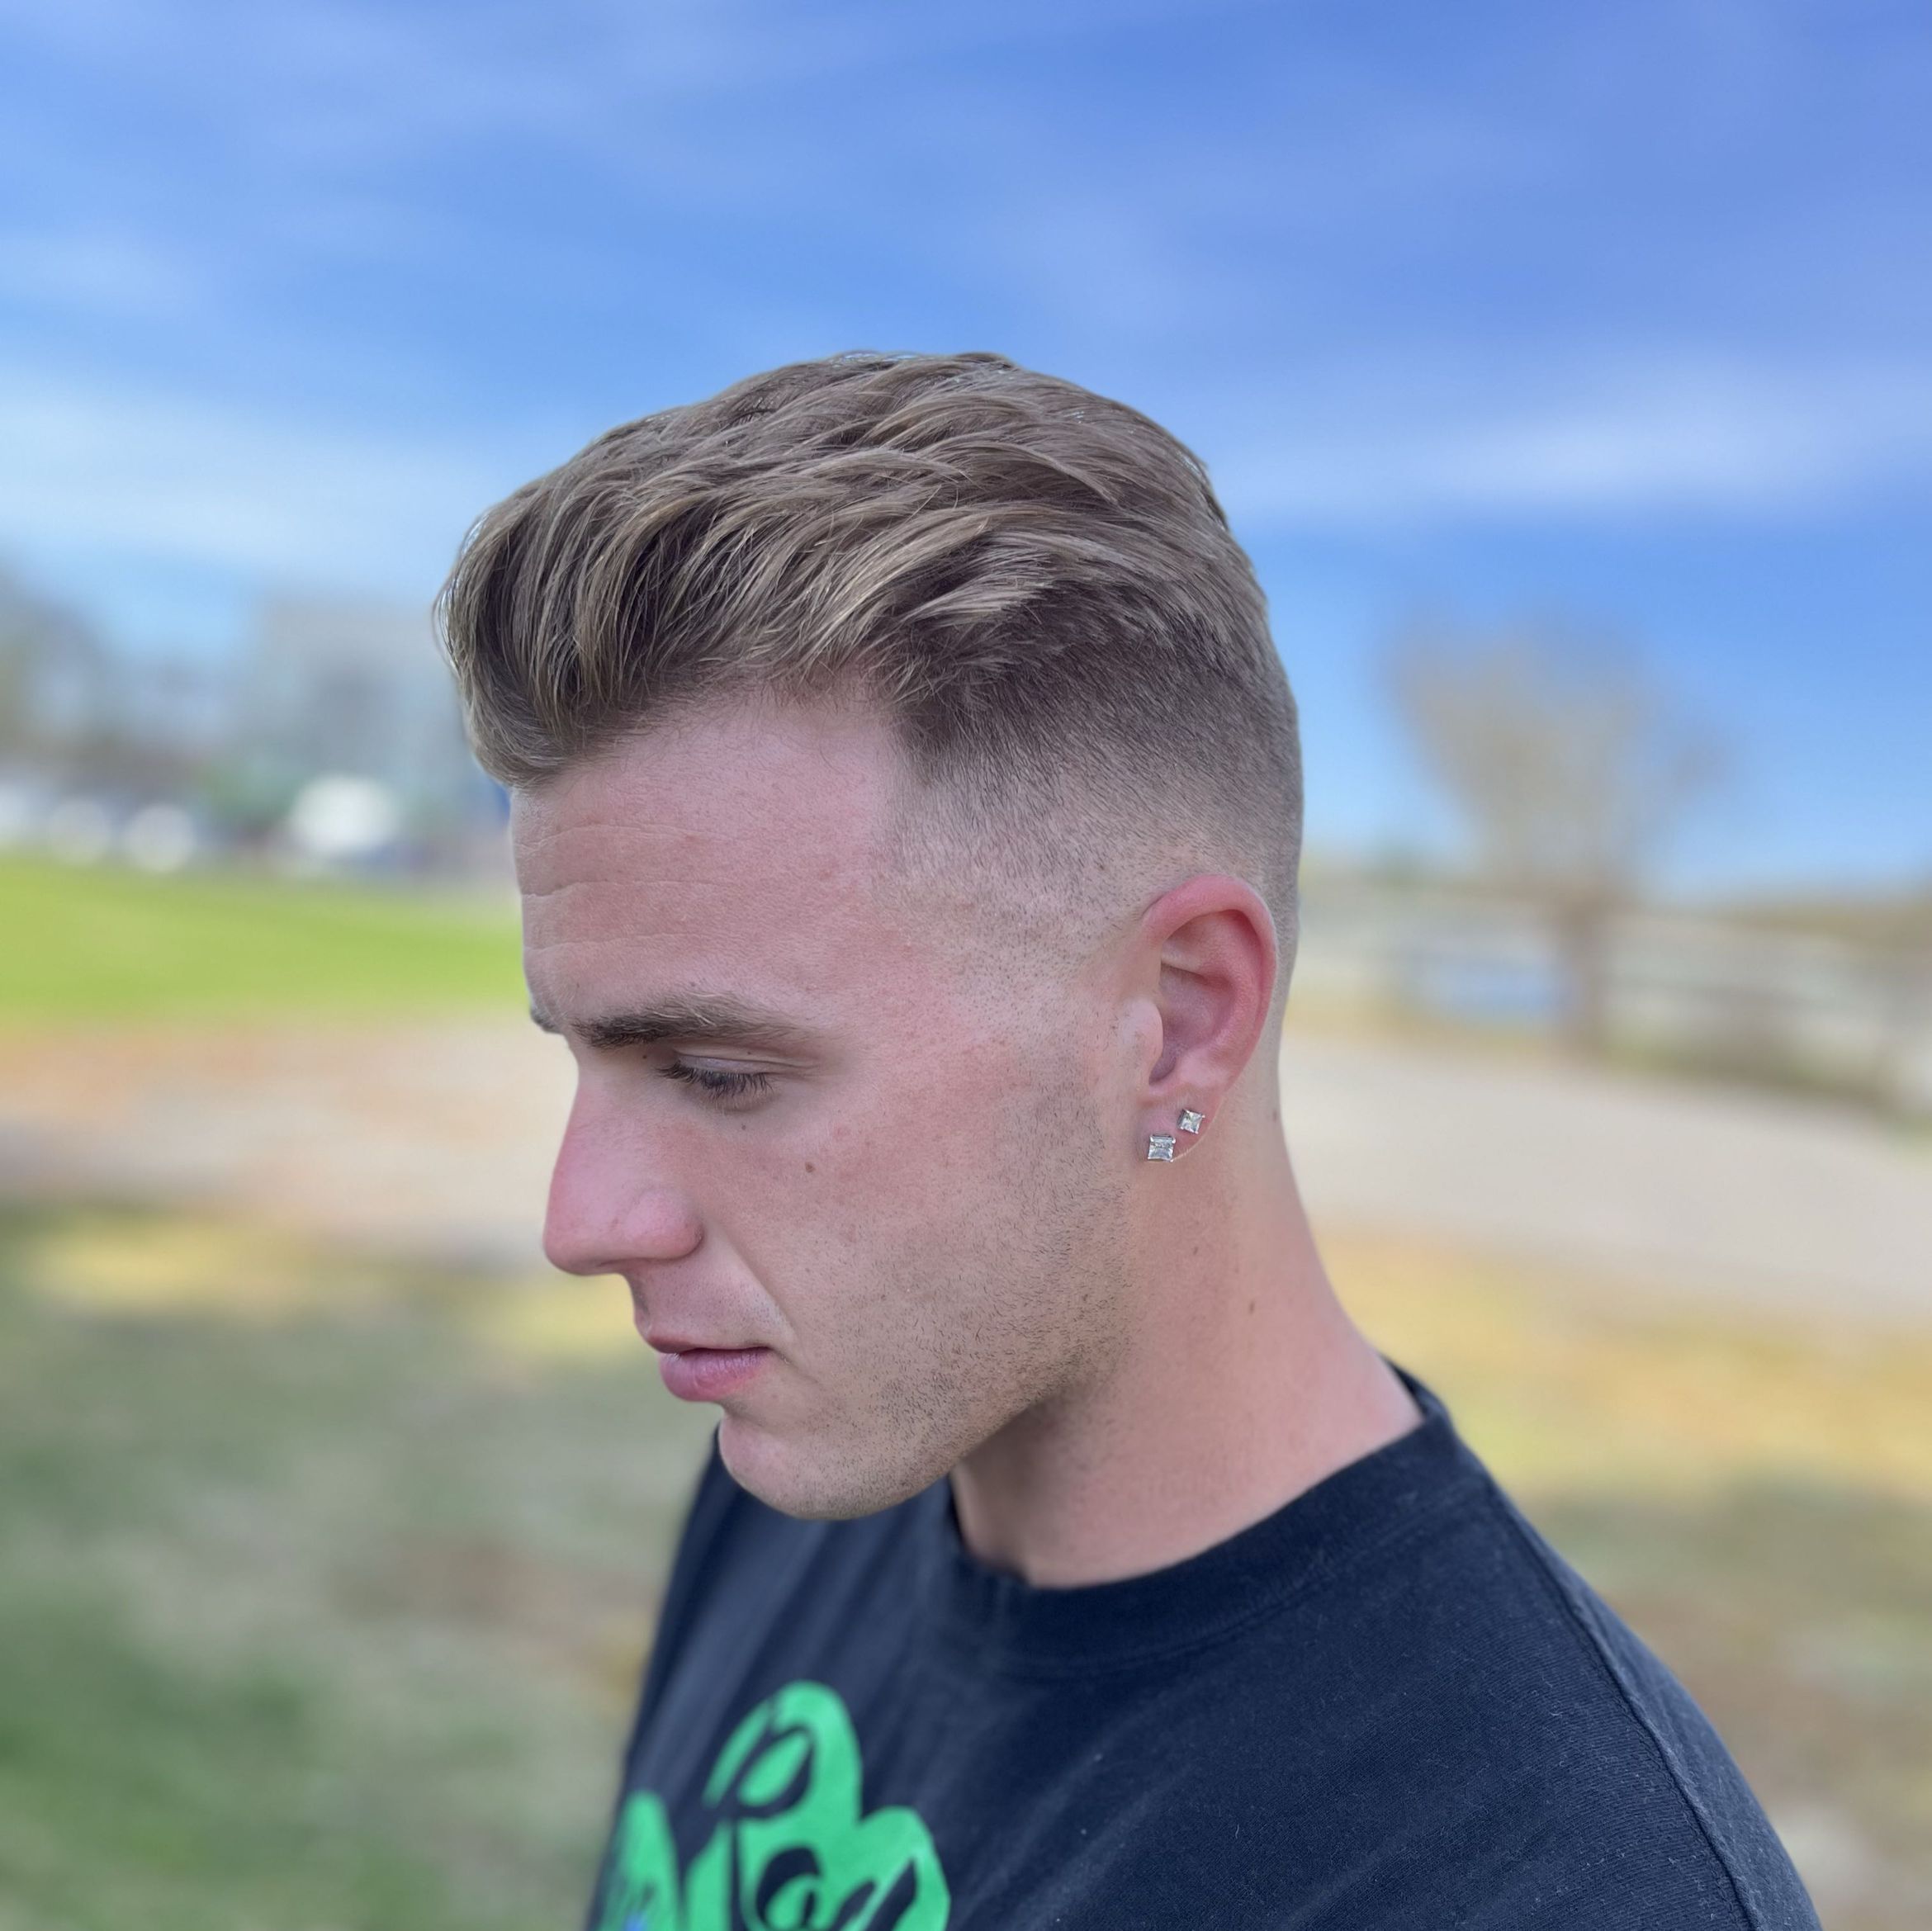 Adult haircut (18+) portfolio